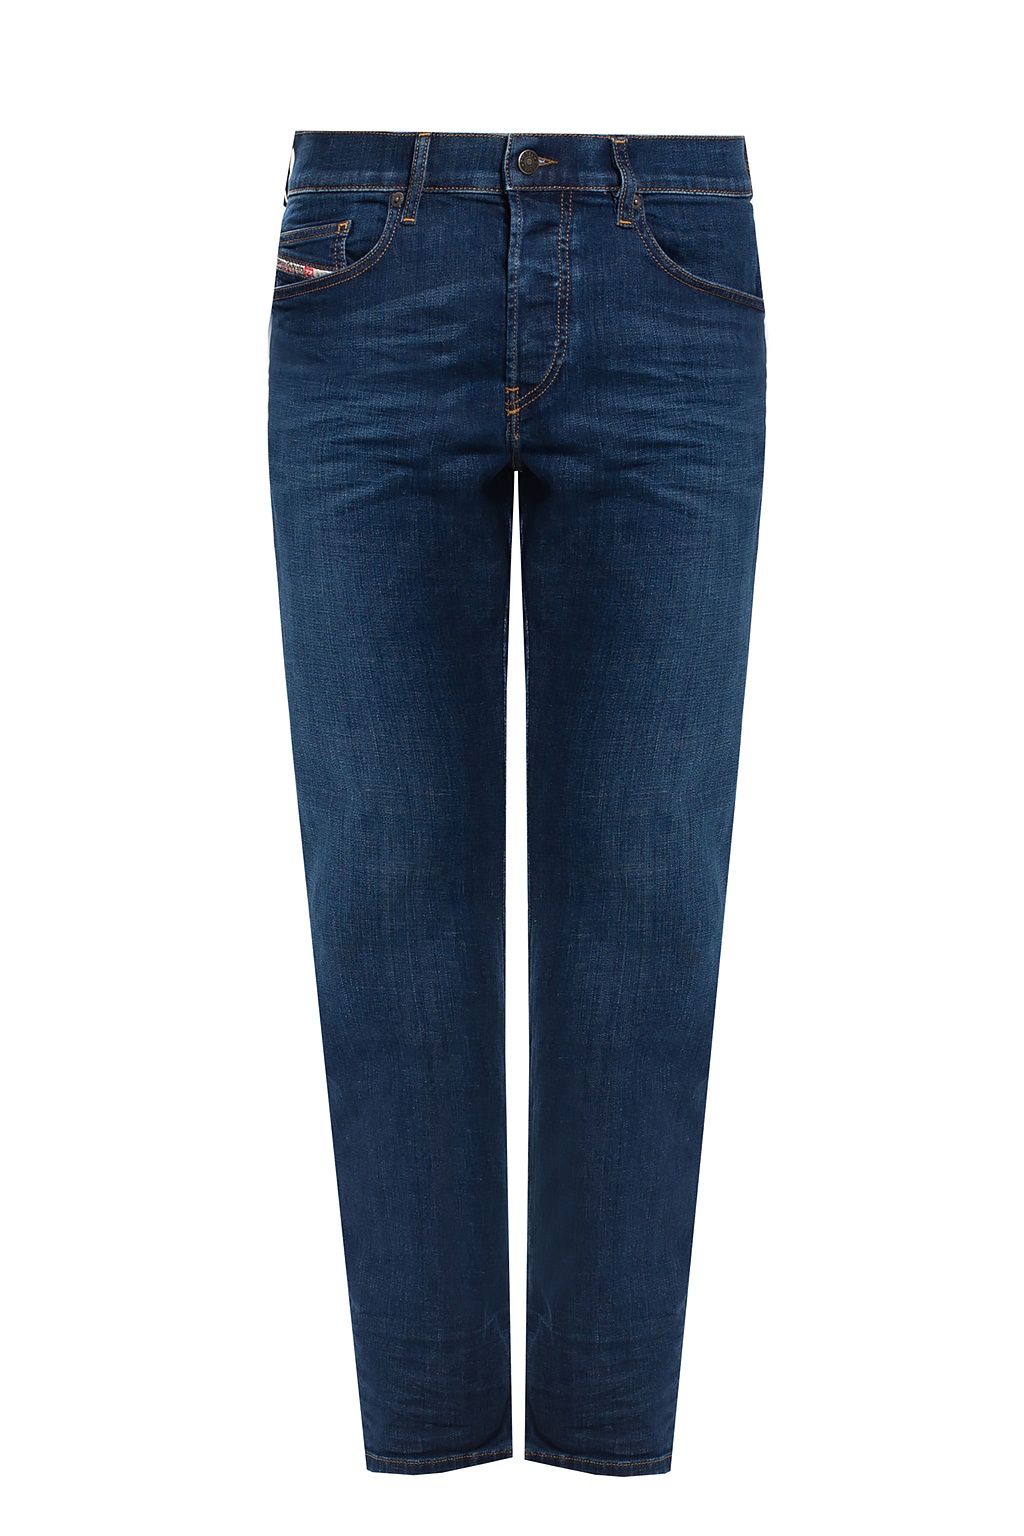 IetpShops | jeans Mihtry\' jeans pepe Men\'s - Шапка - Diesel | Clothing \'D